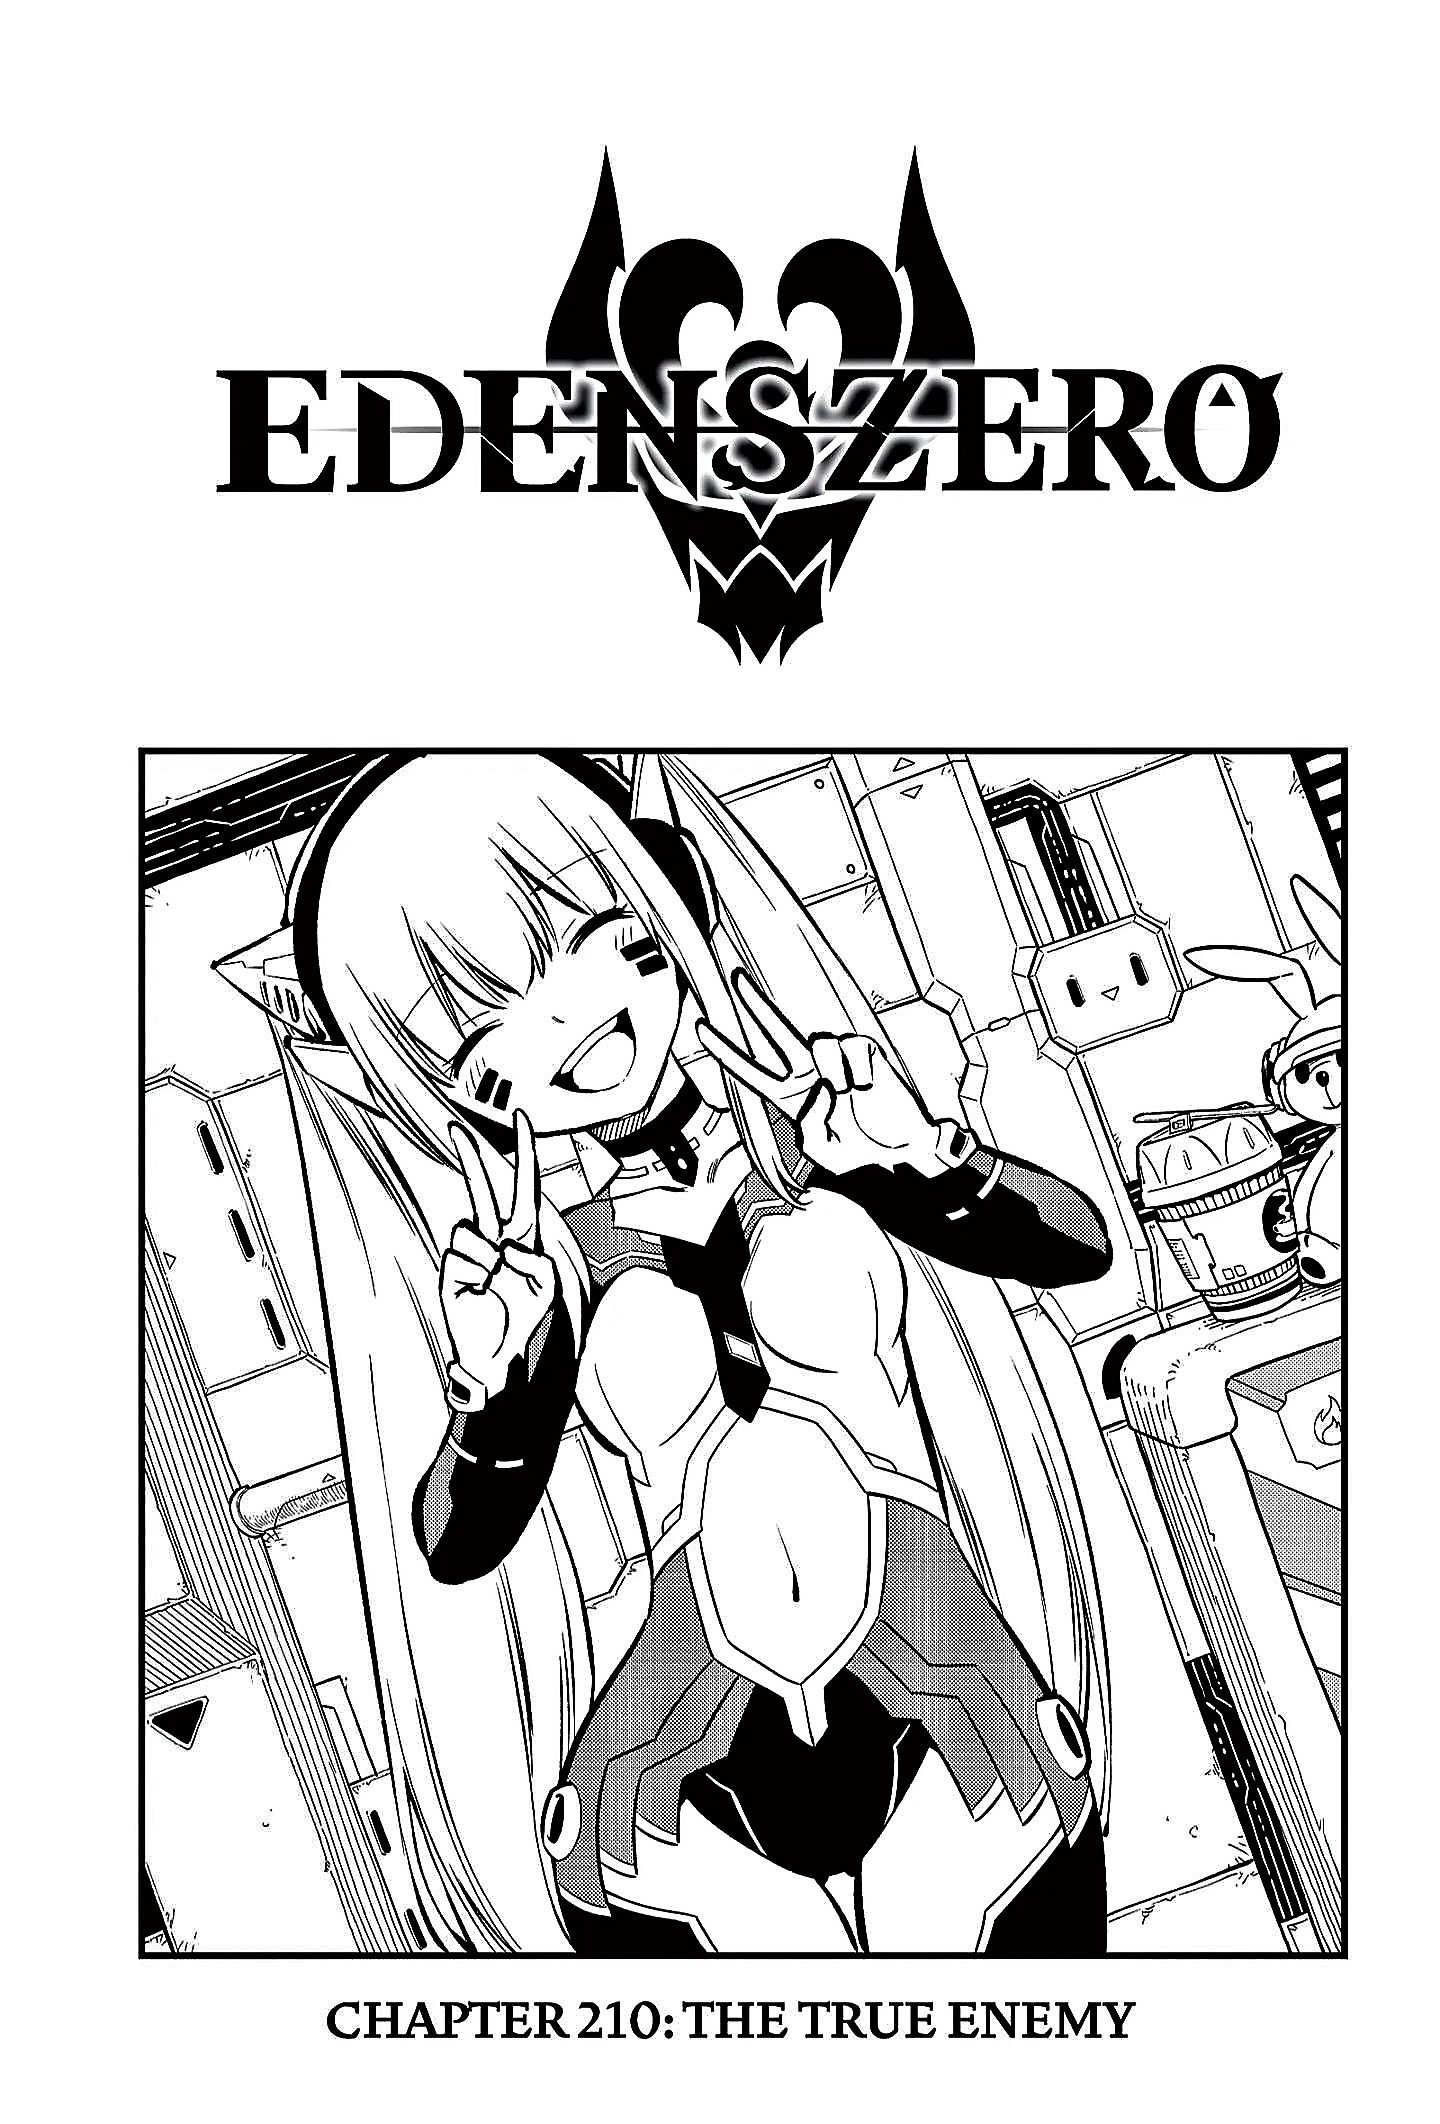 Some Generic Title About The “True Villain.” Edens Zero Chapter 210 BREAKDOWN